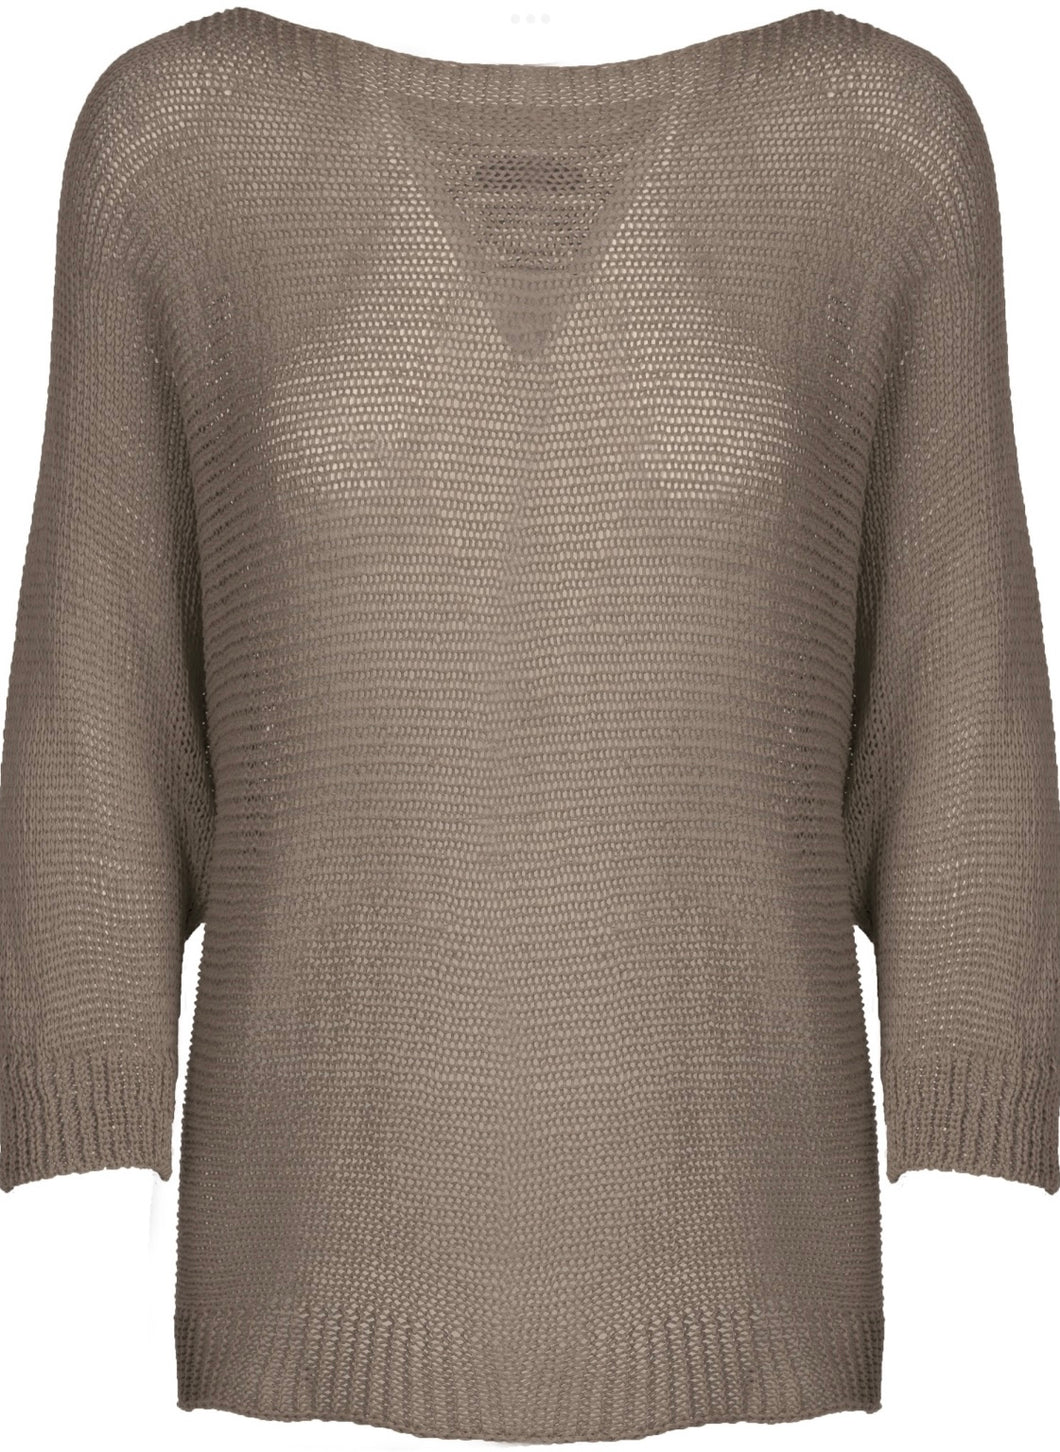 Taupe 3/4 Sleeve Sweater